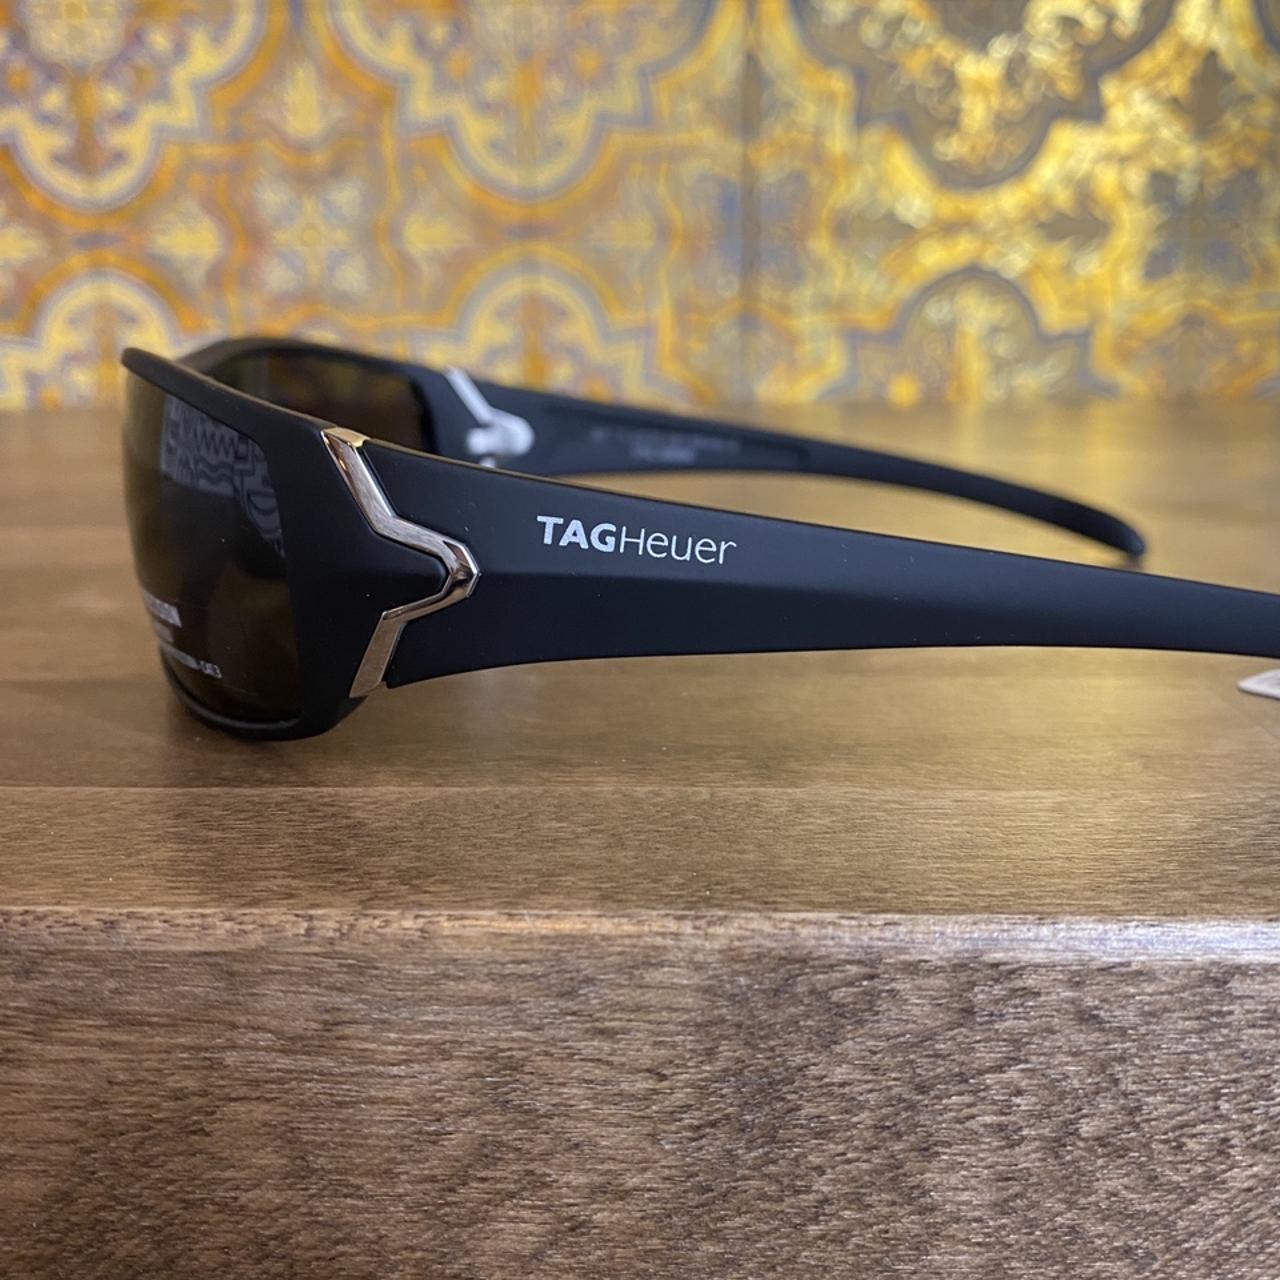 Product Image 4 - Tag heuer racing sunglasses. Brand